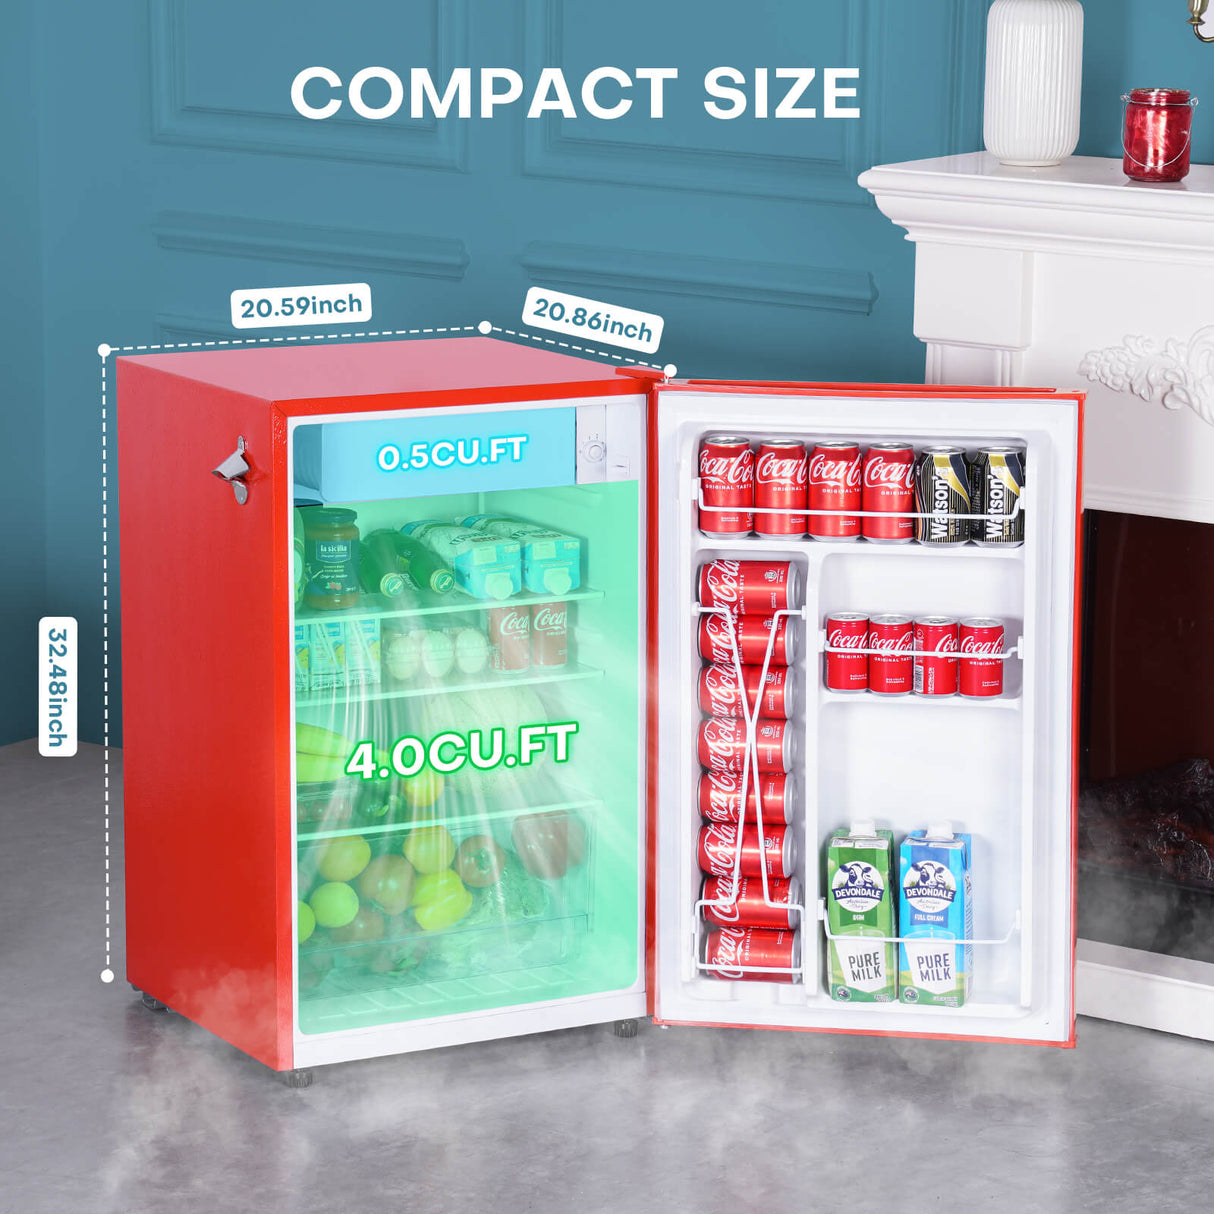 Upstreman 4.5 Cu Ft Retro Compact Refrigerator, Mini Fridge with Freezer for Bedroom, Adjustable Thermostat, Side Bottle Opener, Small Fridge for Office, Bedroom, Dorm, Bar, Red-CR45